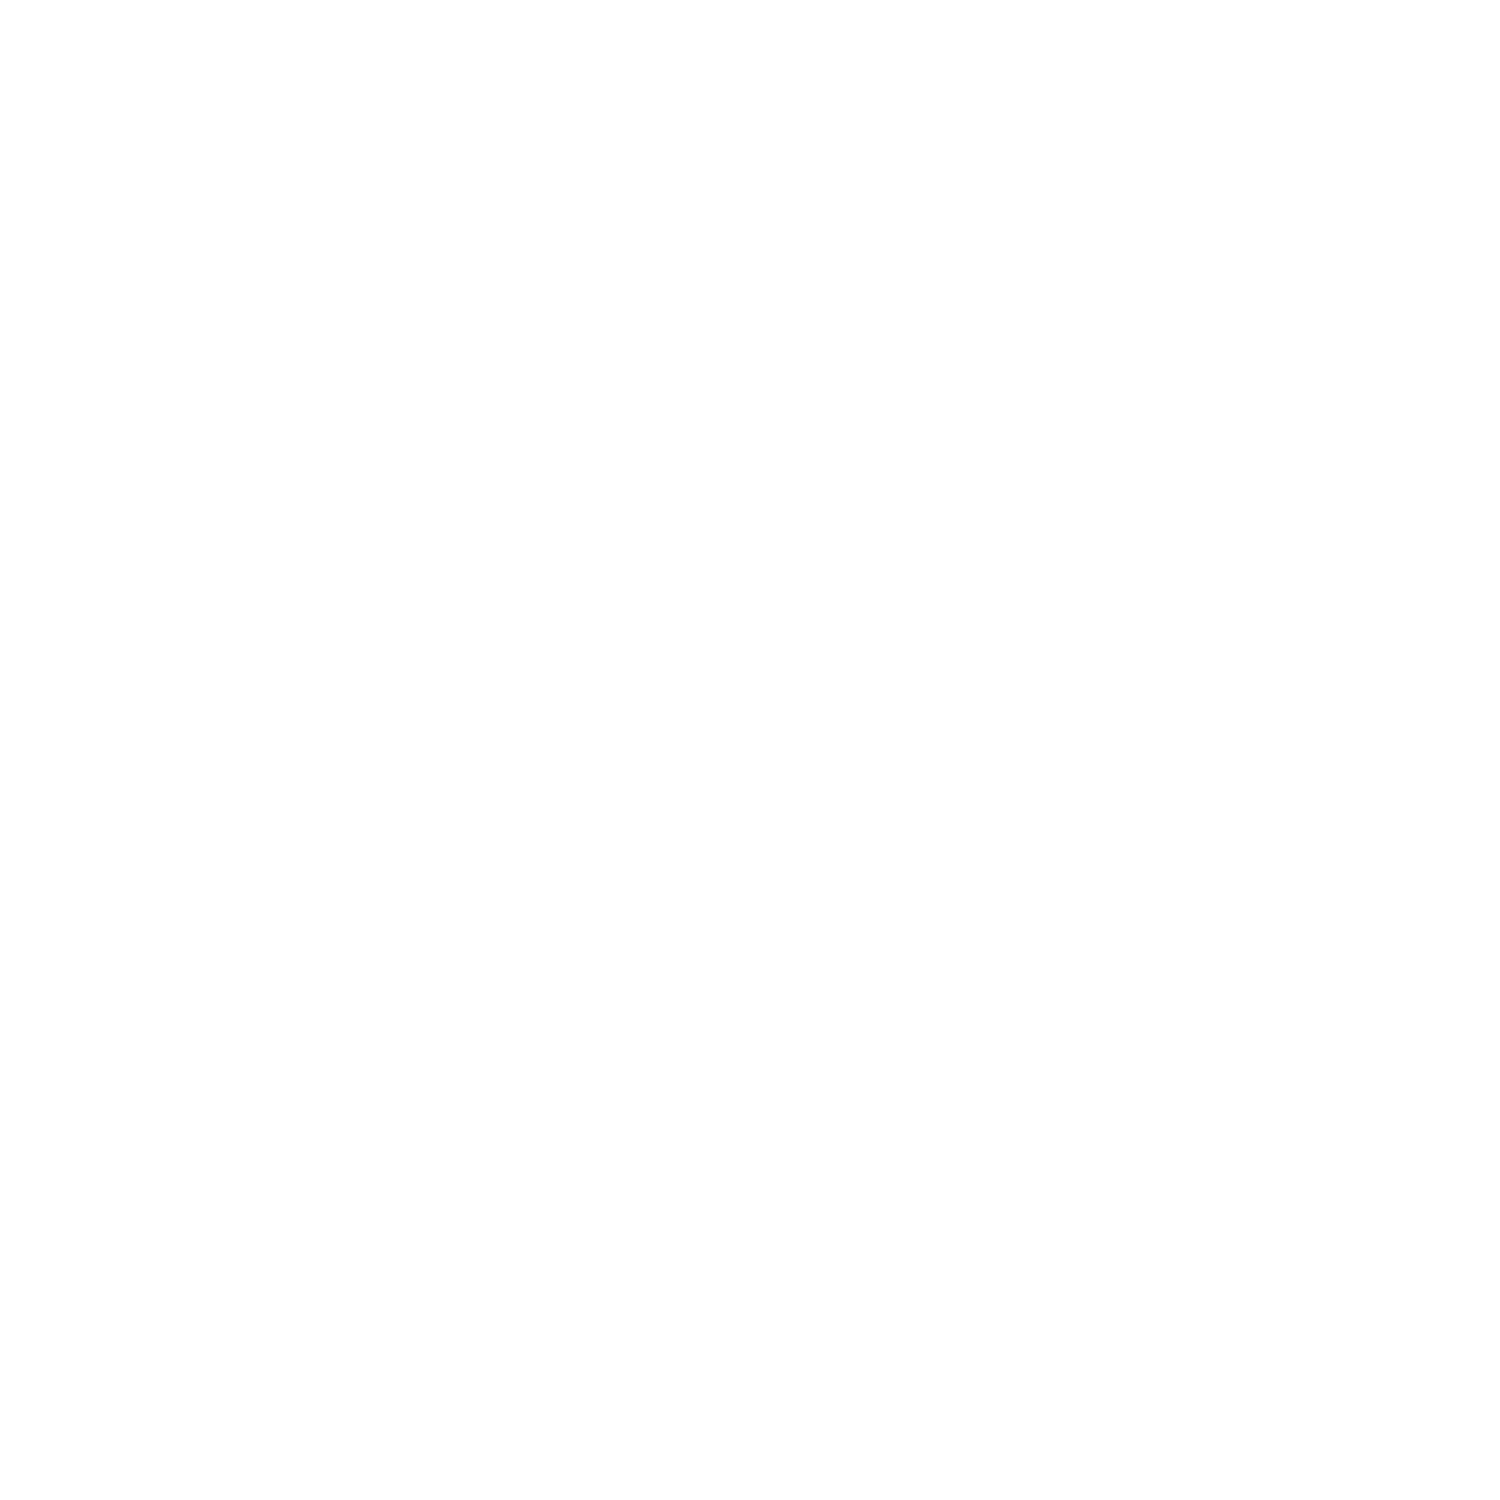 Iglutheca